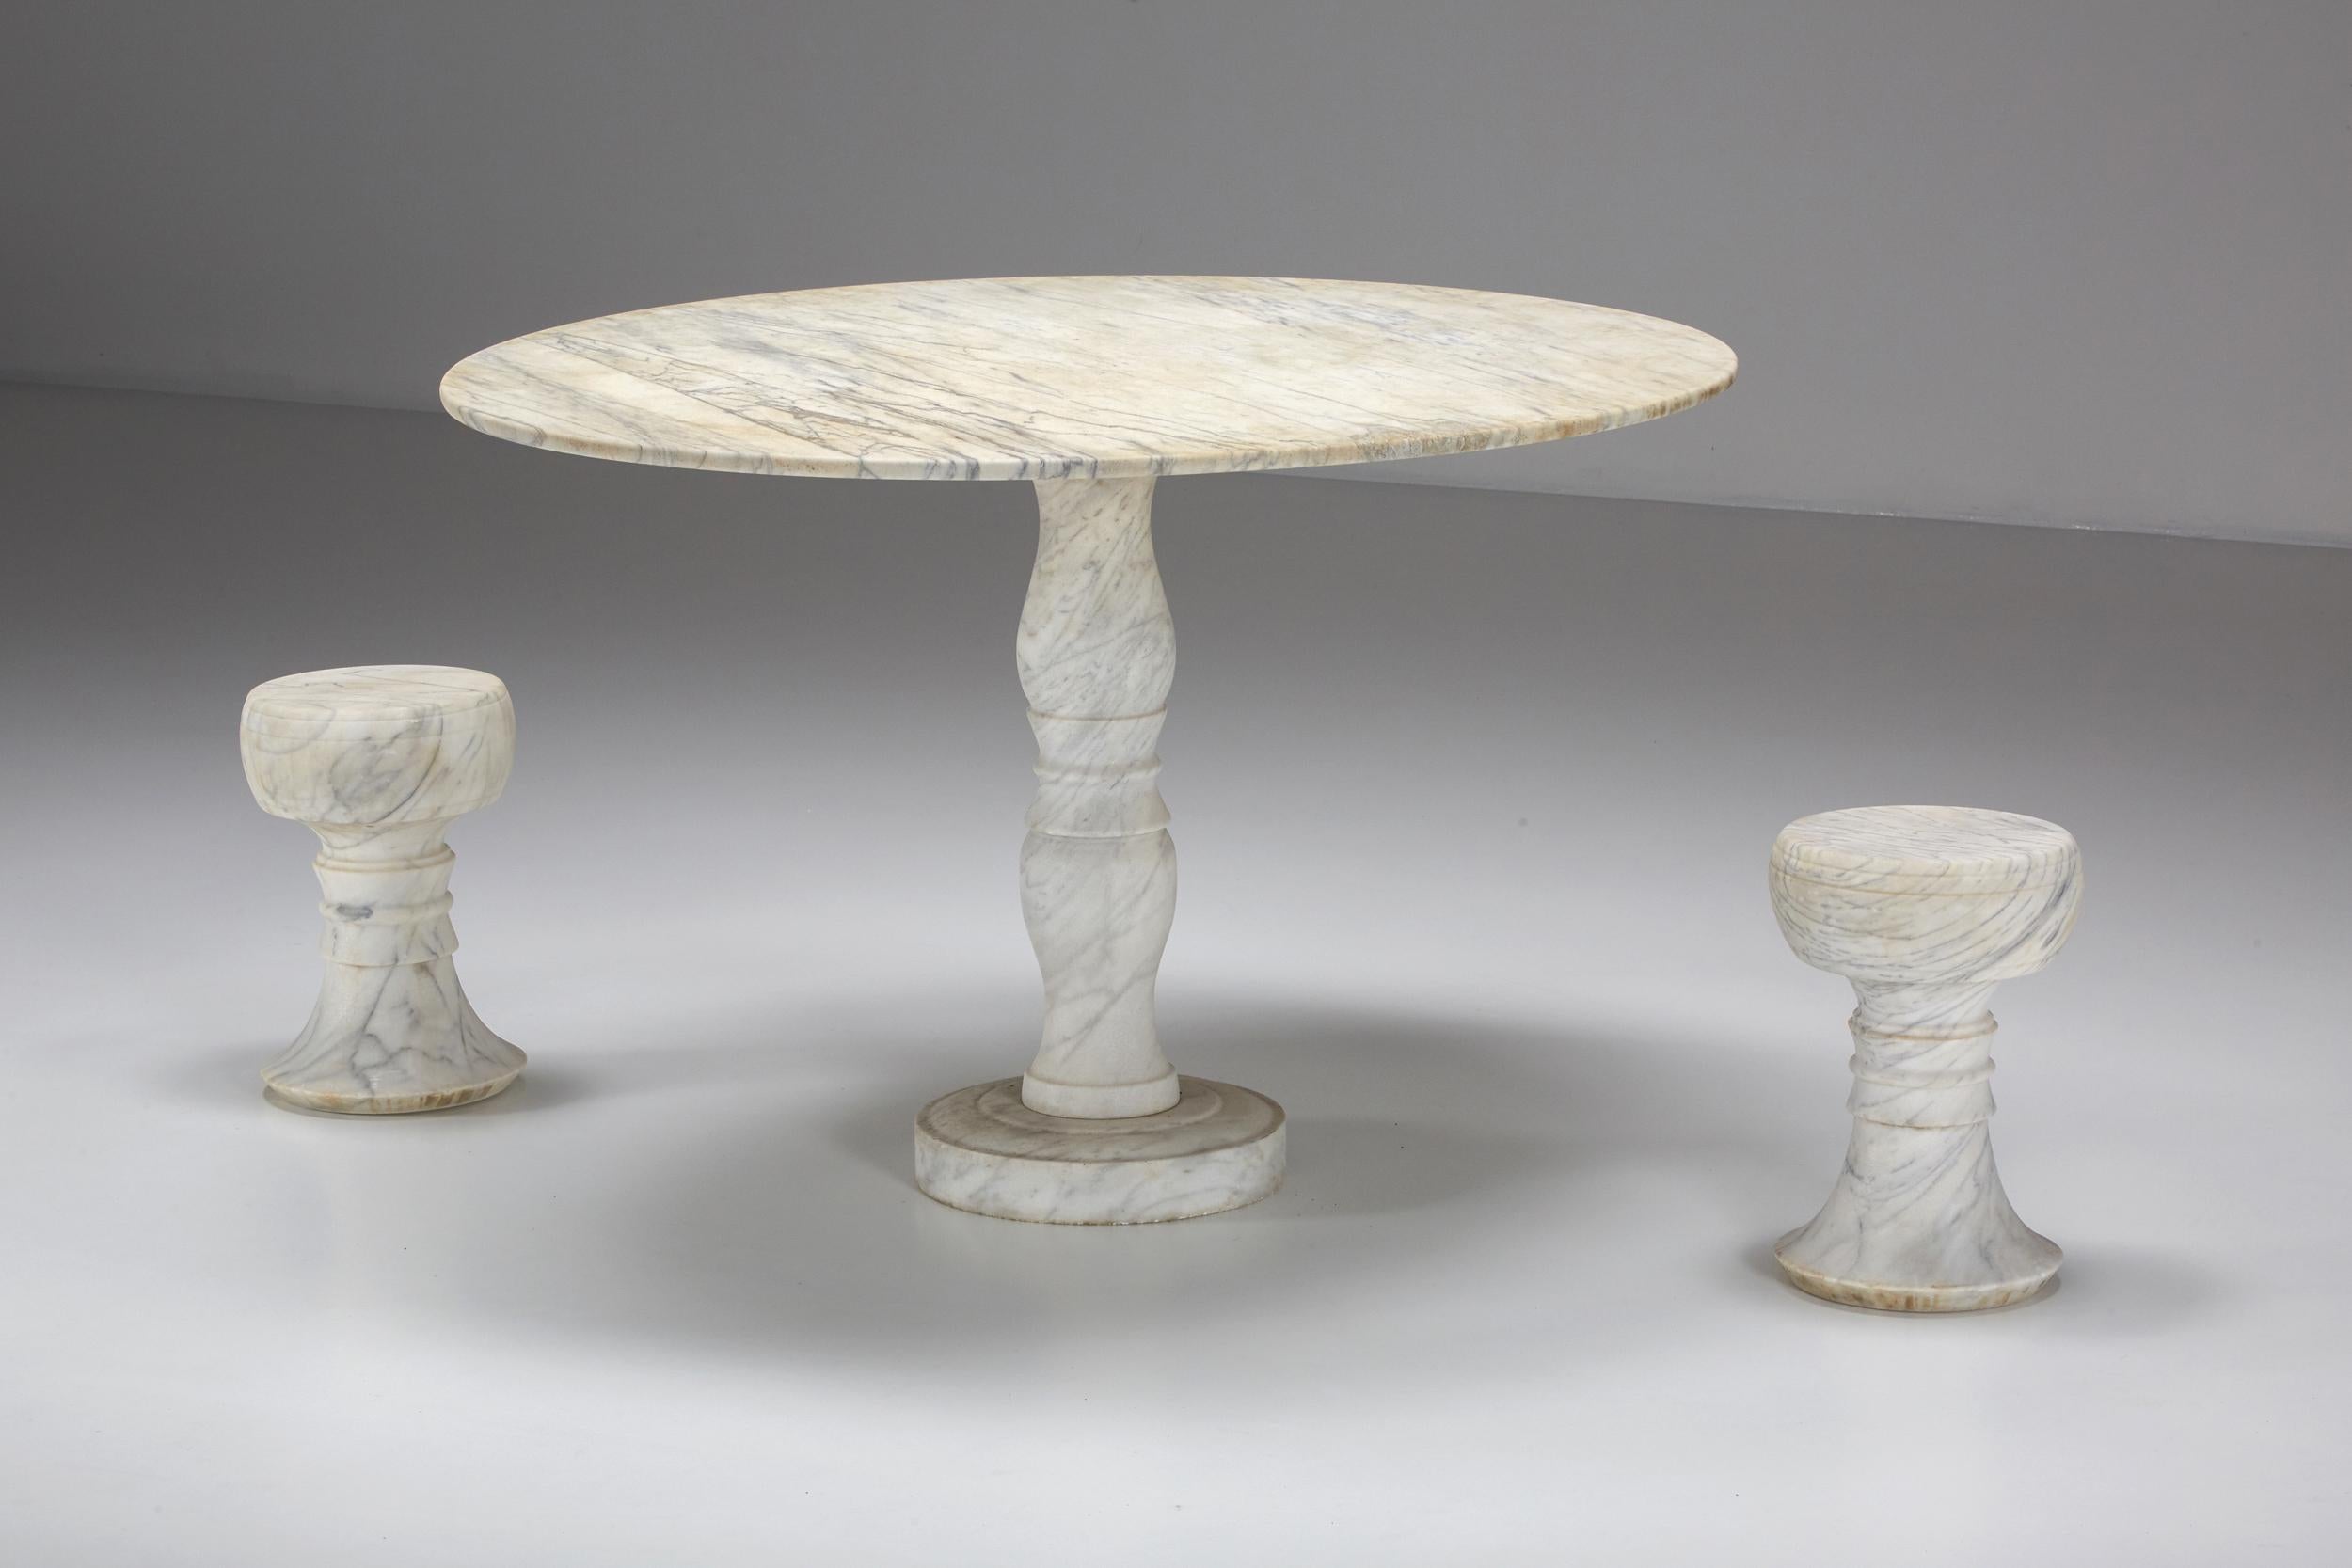 Italian Mangiarotti Style Carrara Marble Dining Table, Garden Furniture, 1950's